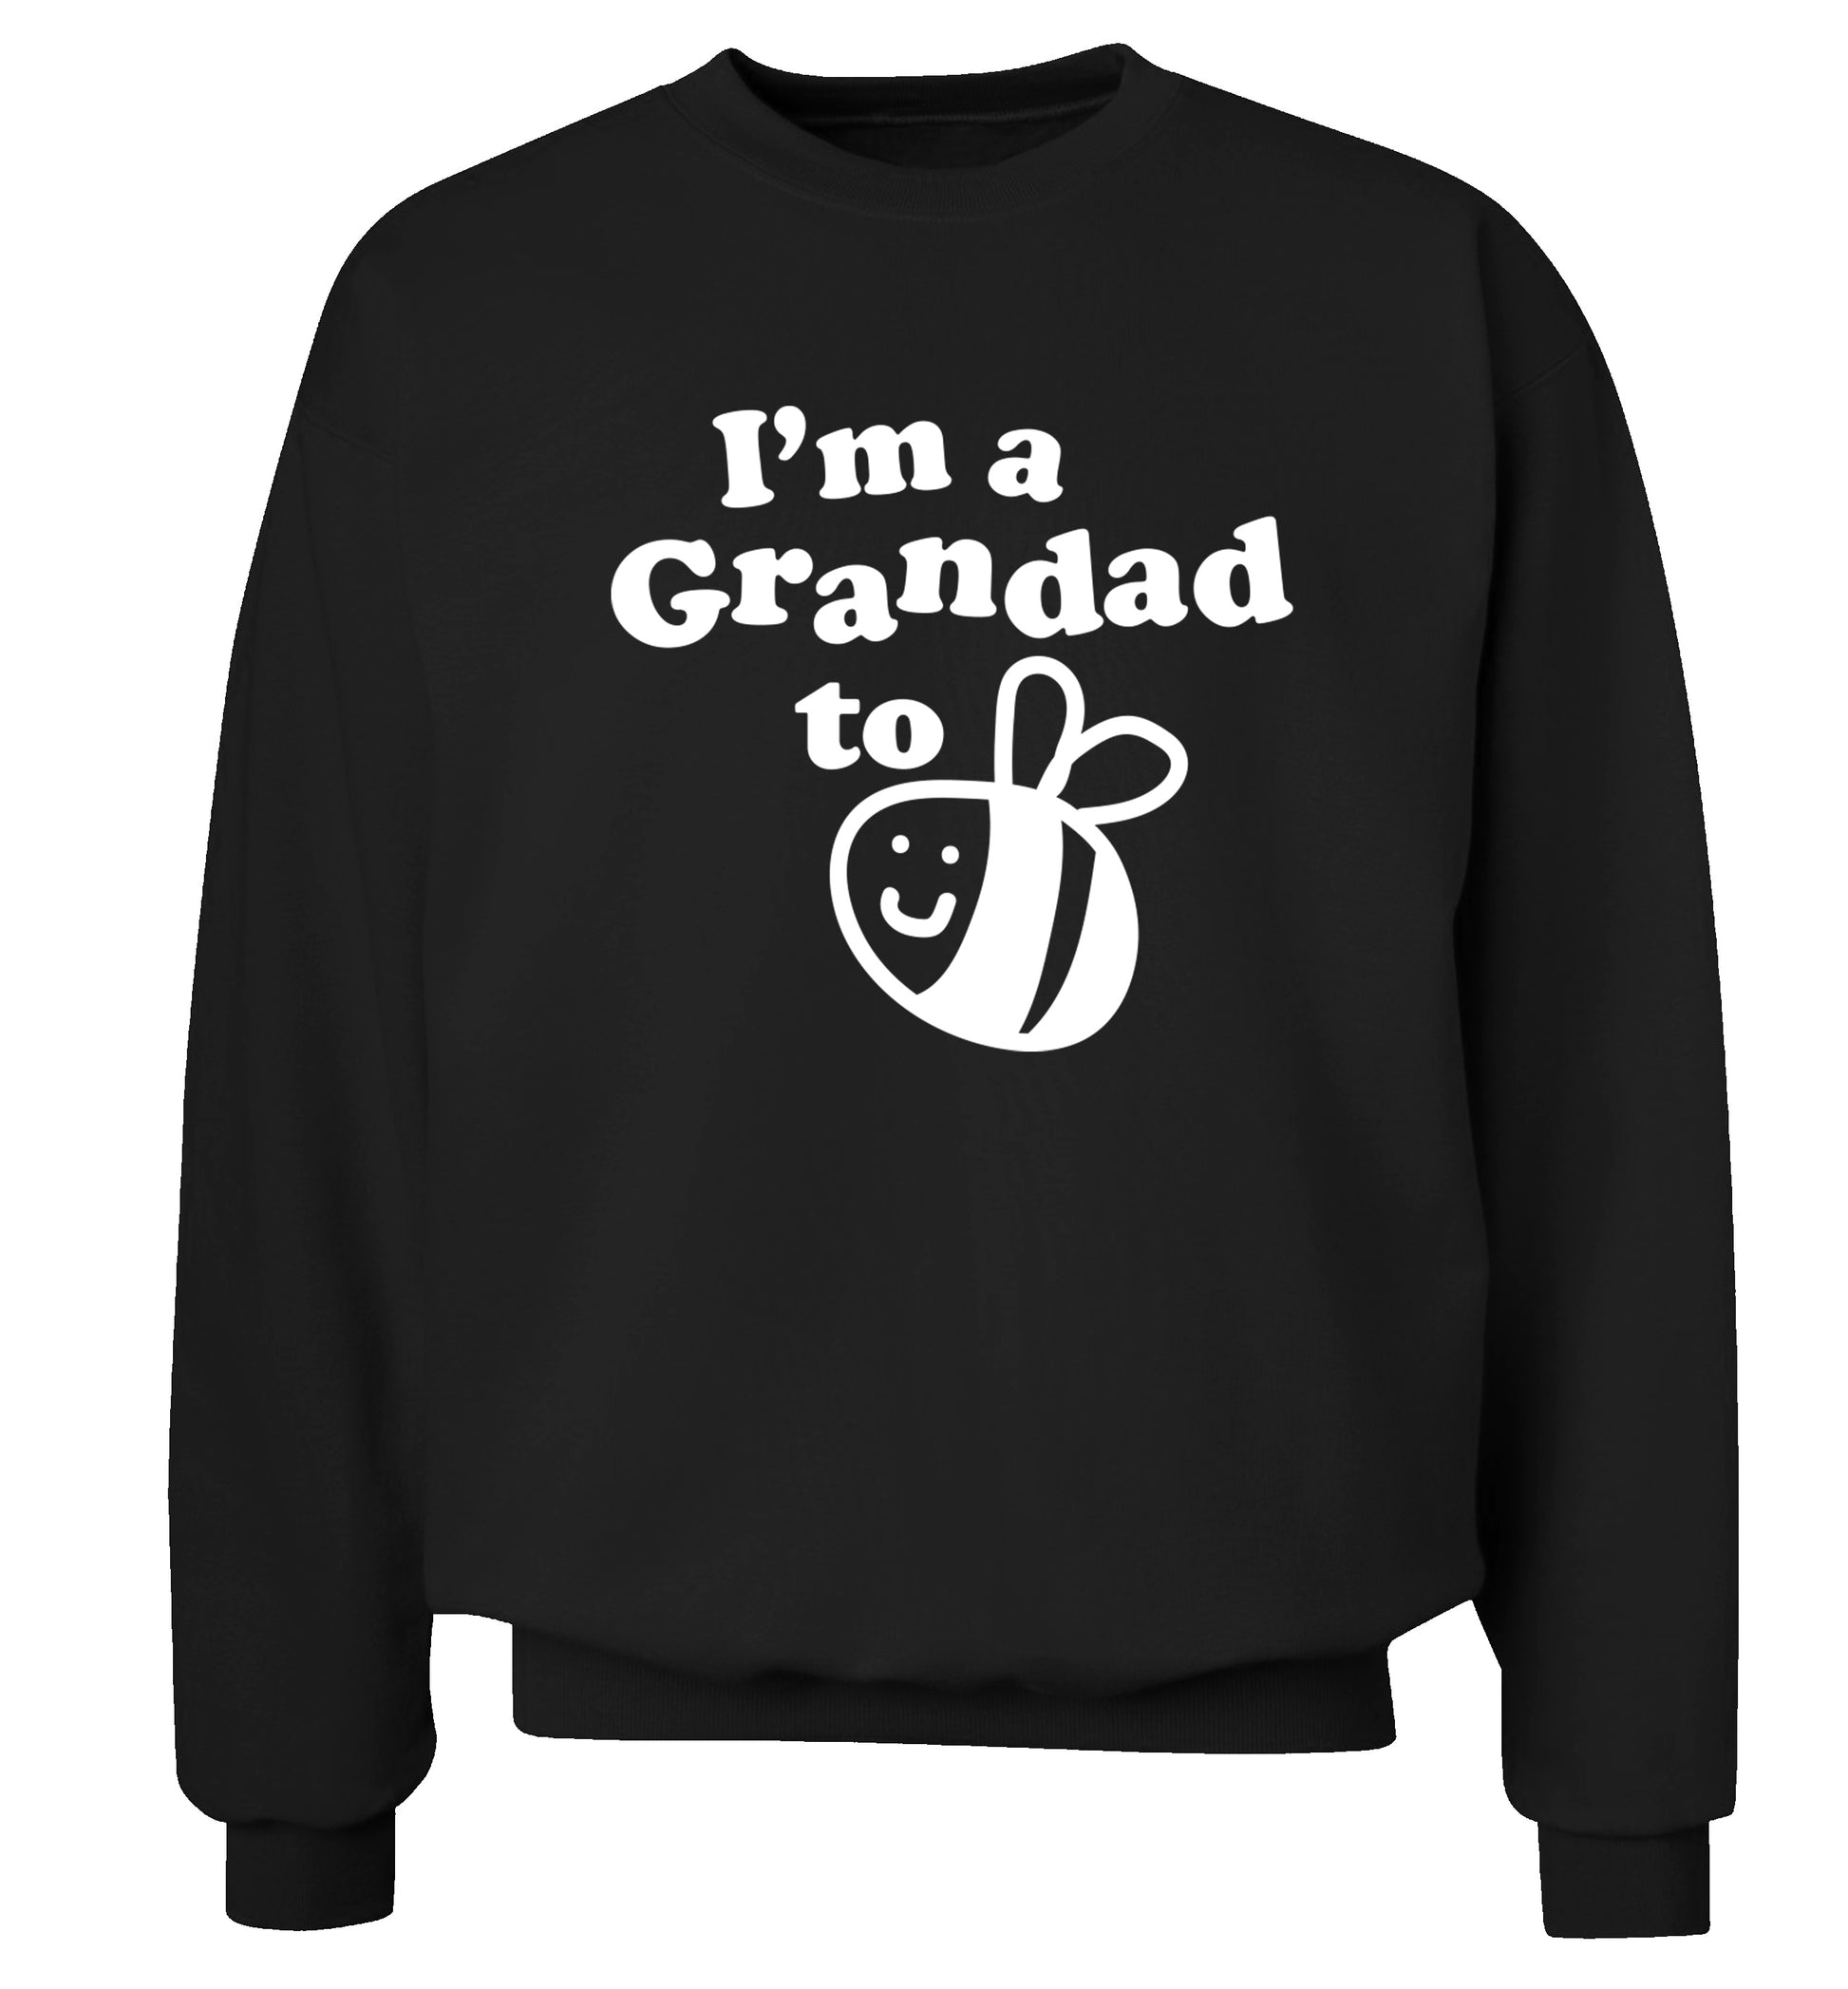 I'm a grandad to be Adult's unisex black Sweater 2XL